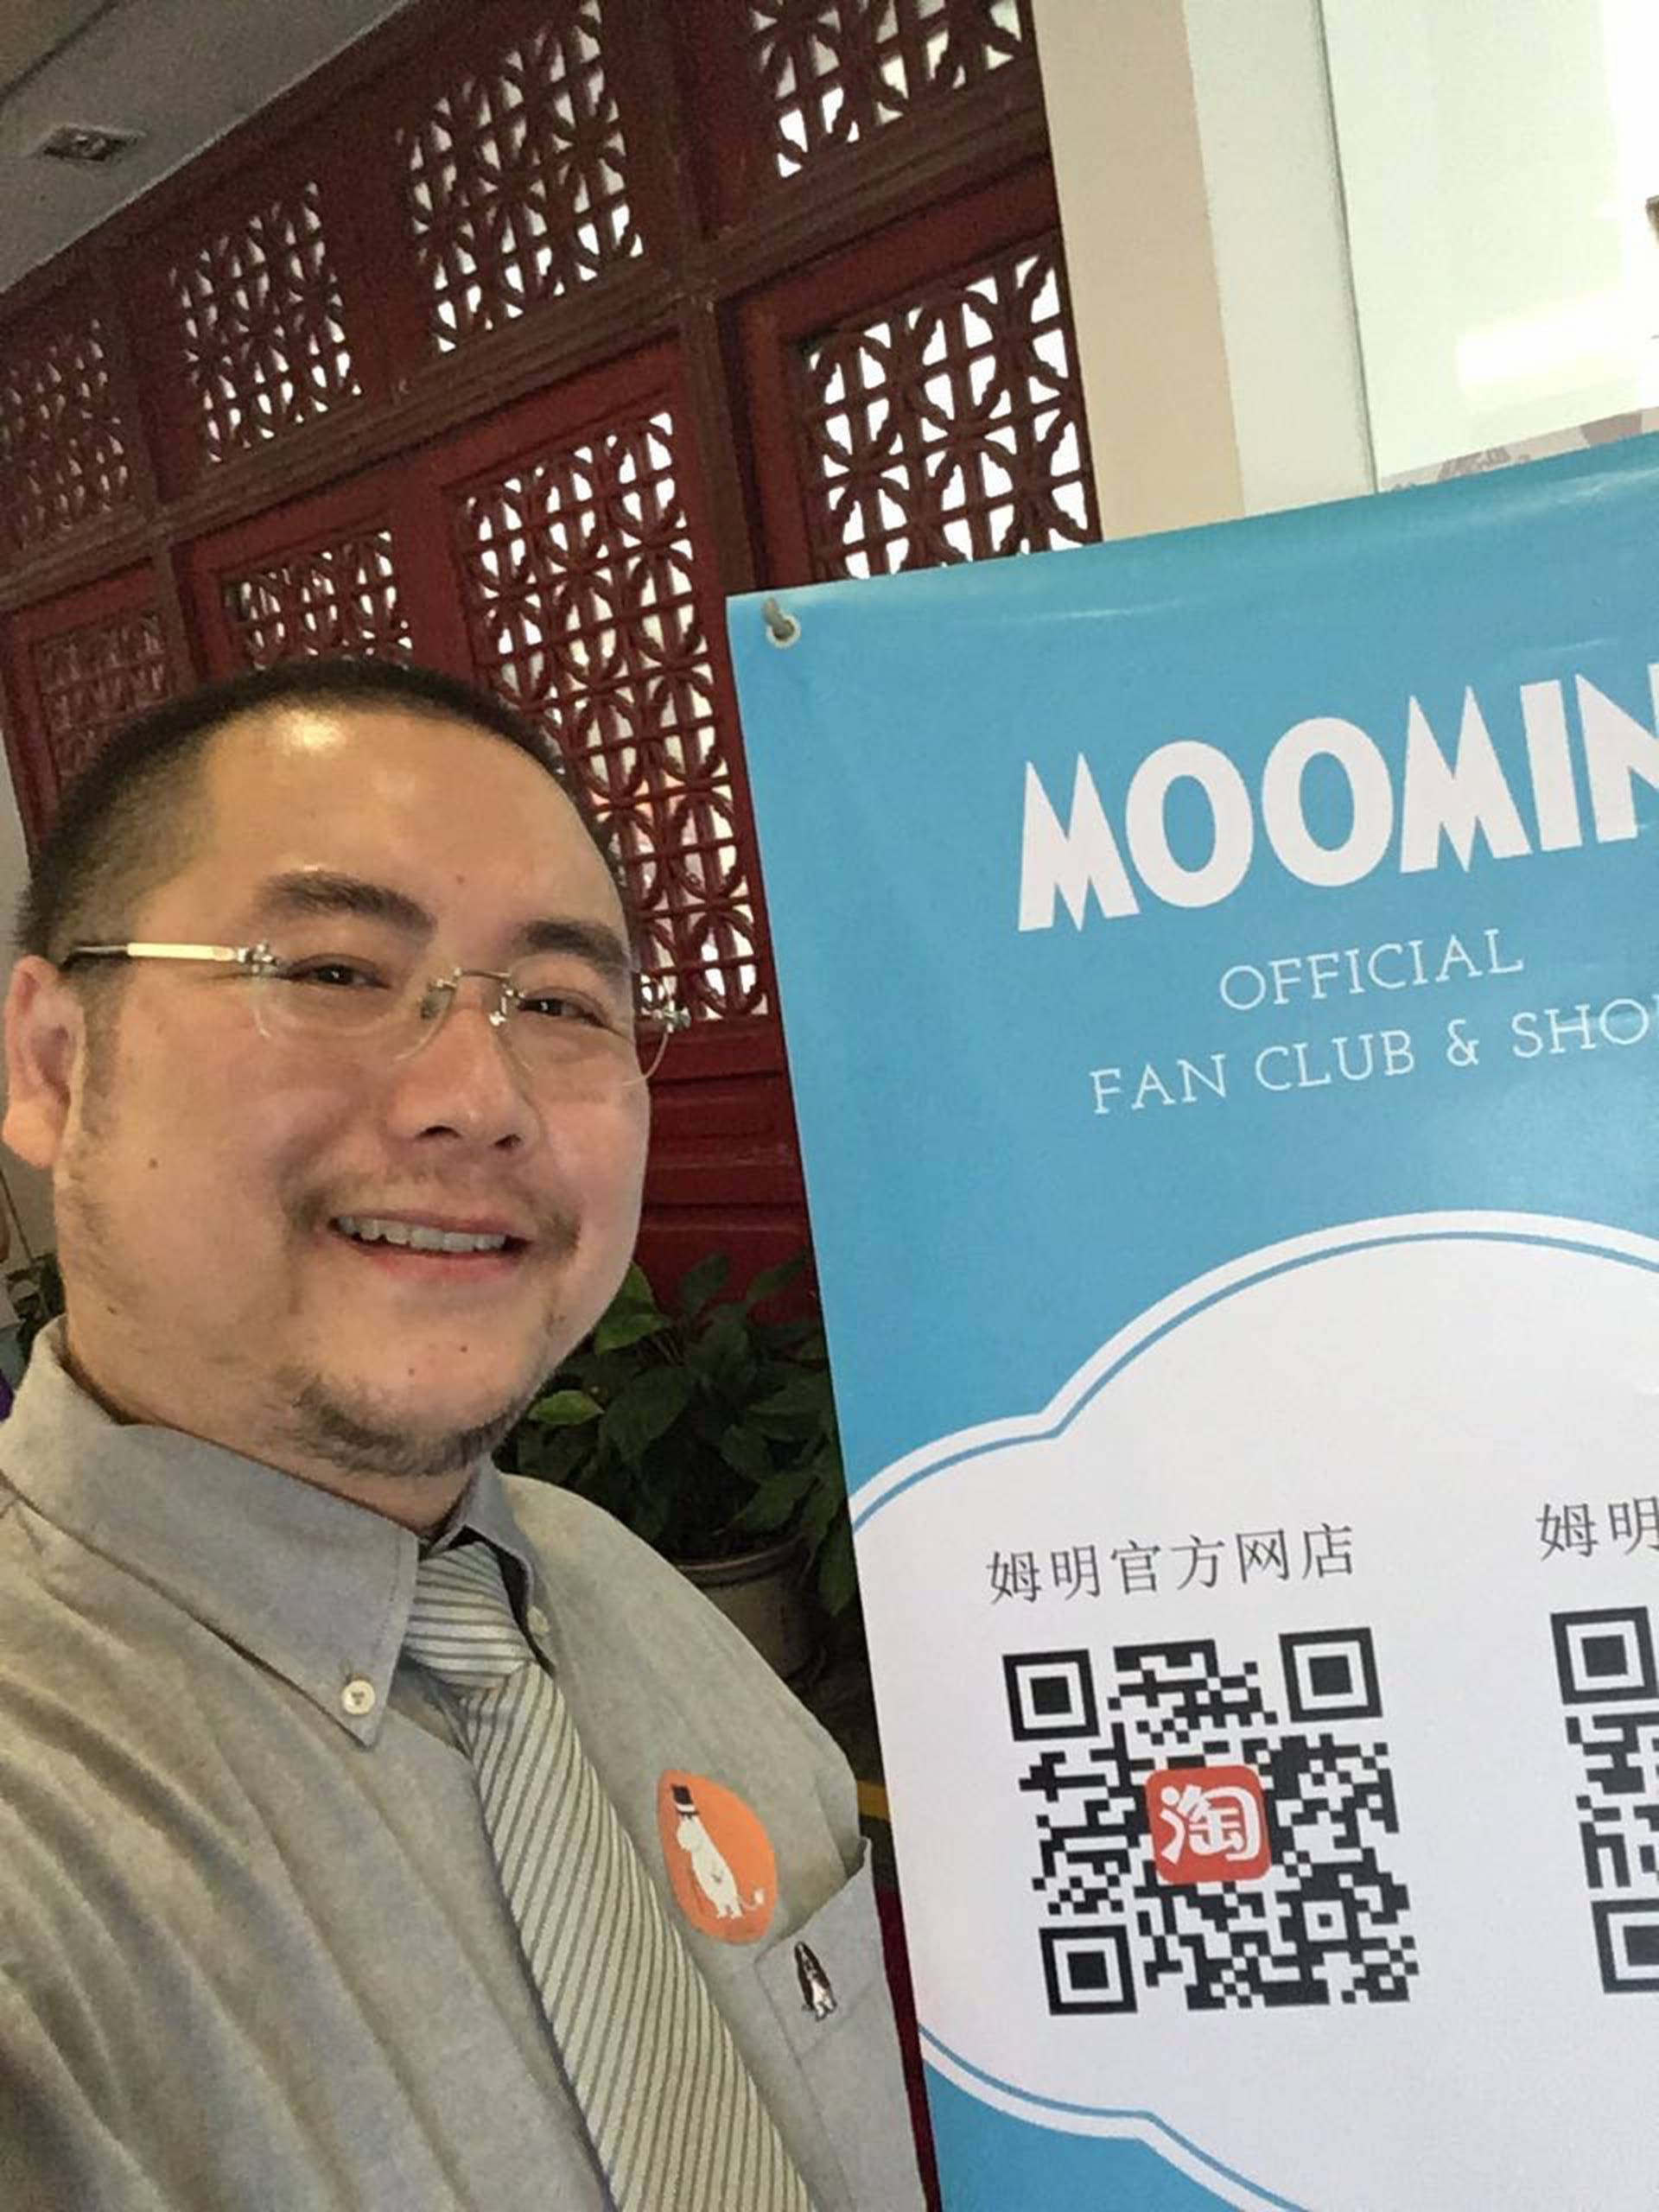 Moomin books in China by Tsinghua Press